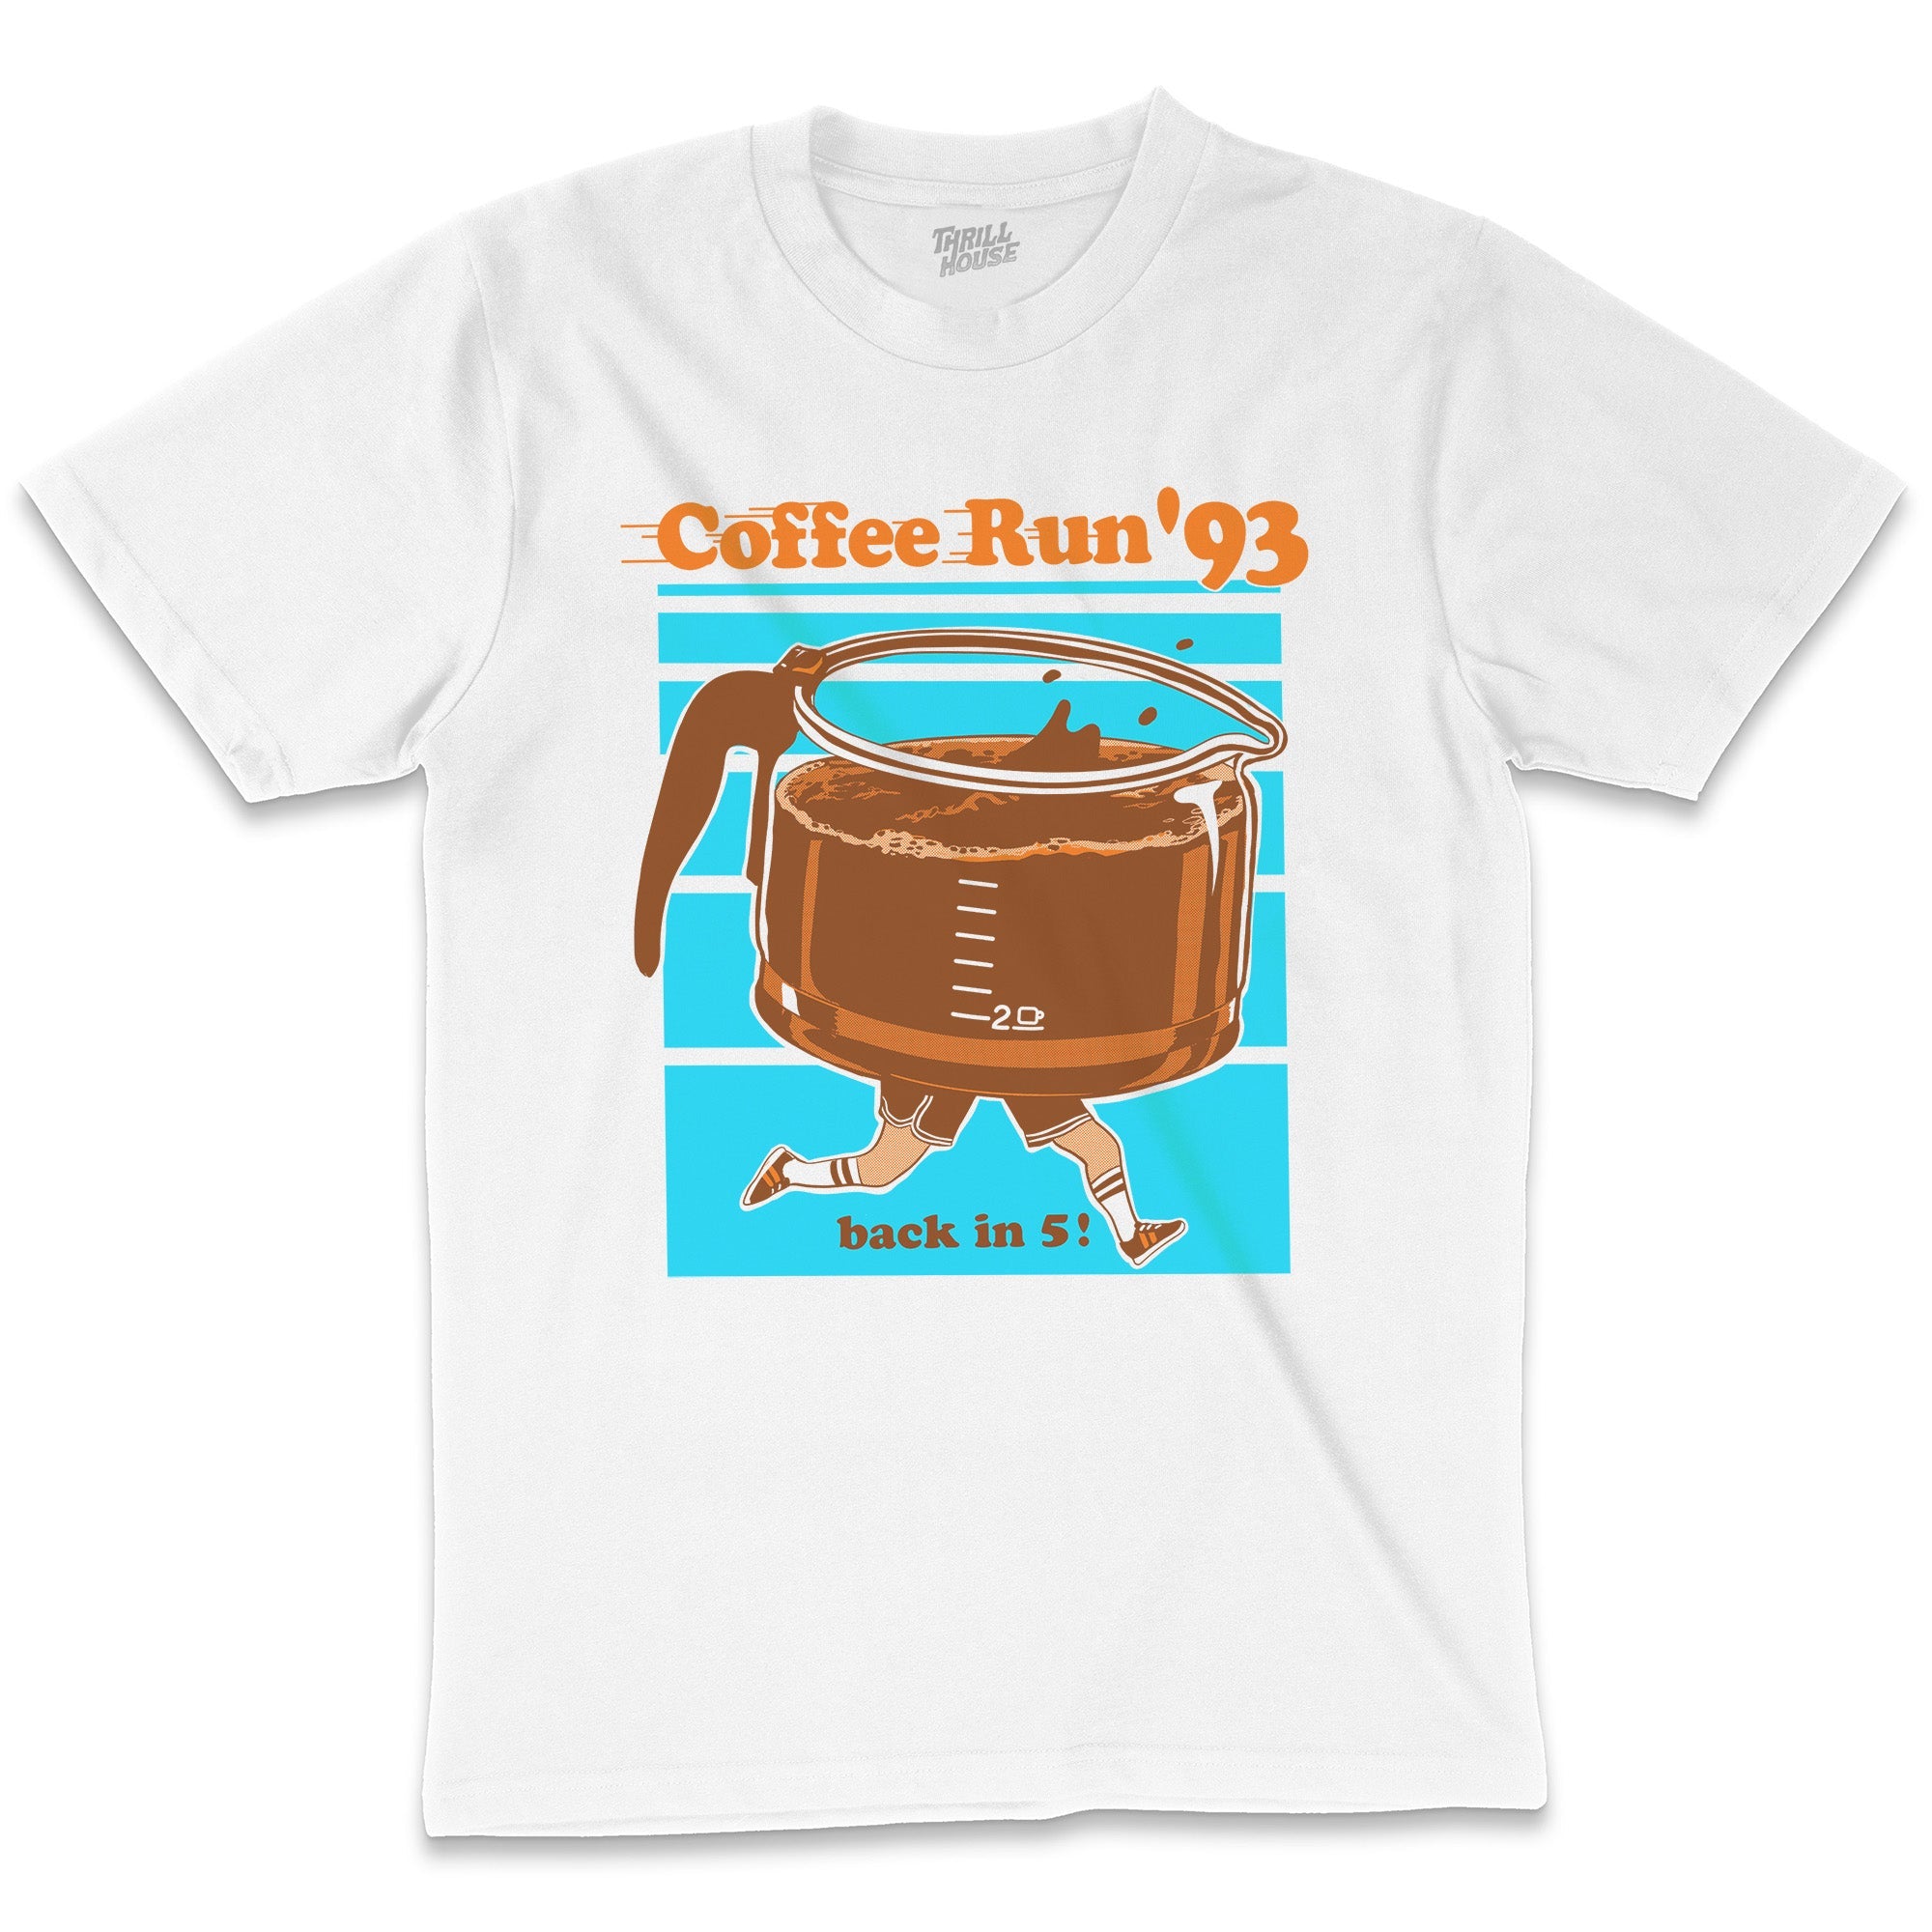 Coffee Run '93 T-Shirt Australia Online White